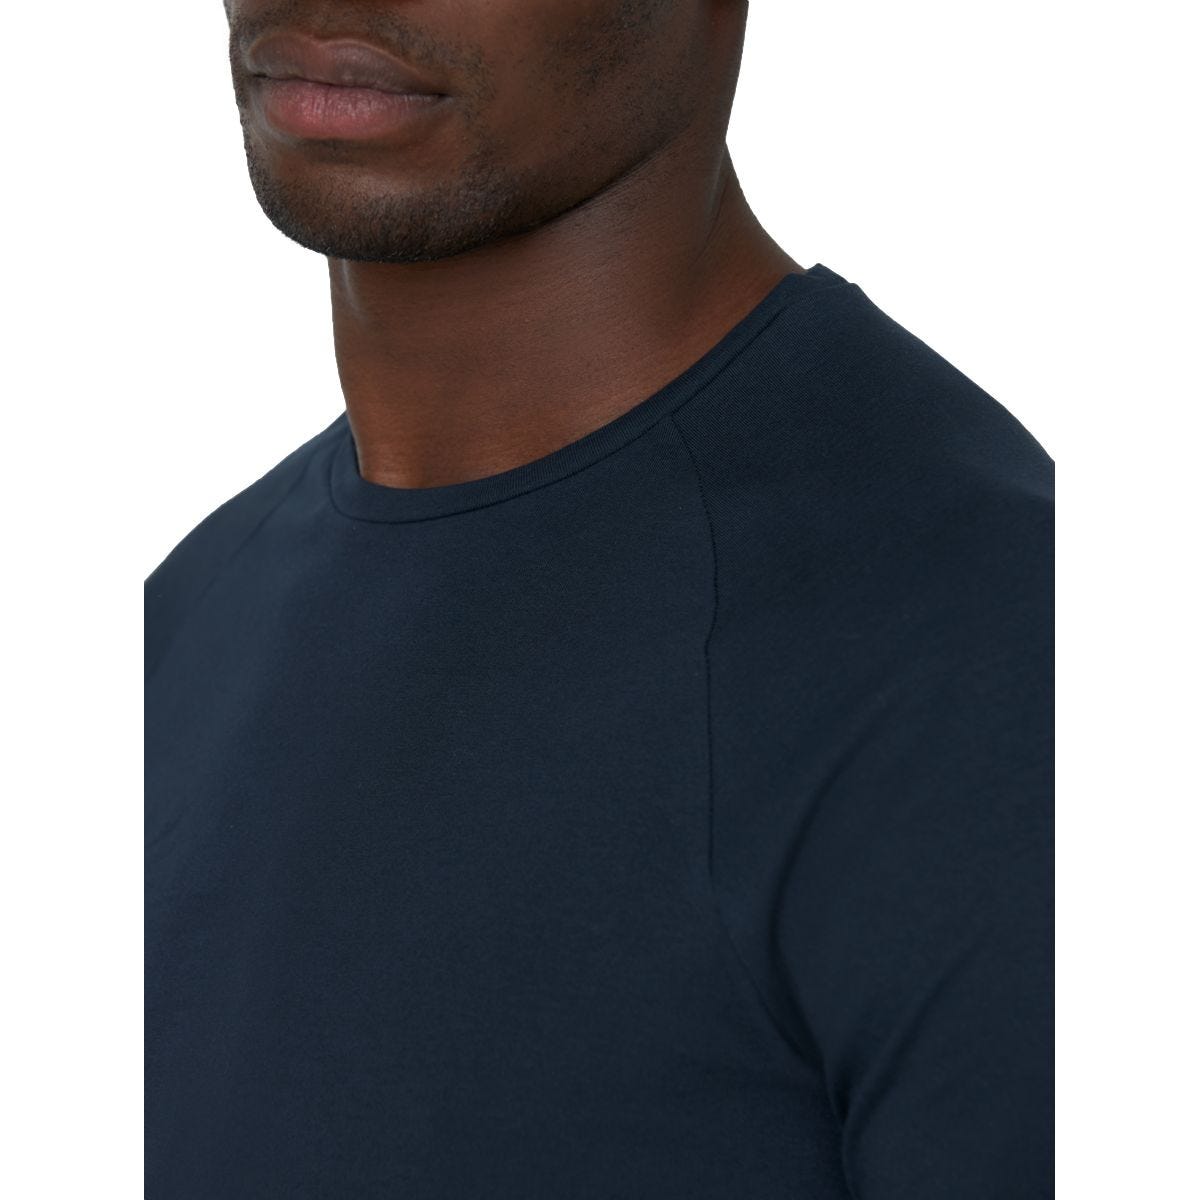 Tee-shirt Temp-IQ Bleu marine - Dickies - Taille XL 3